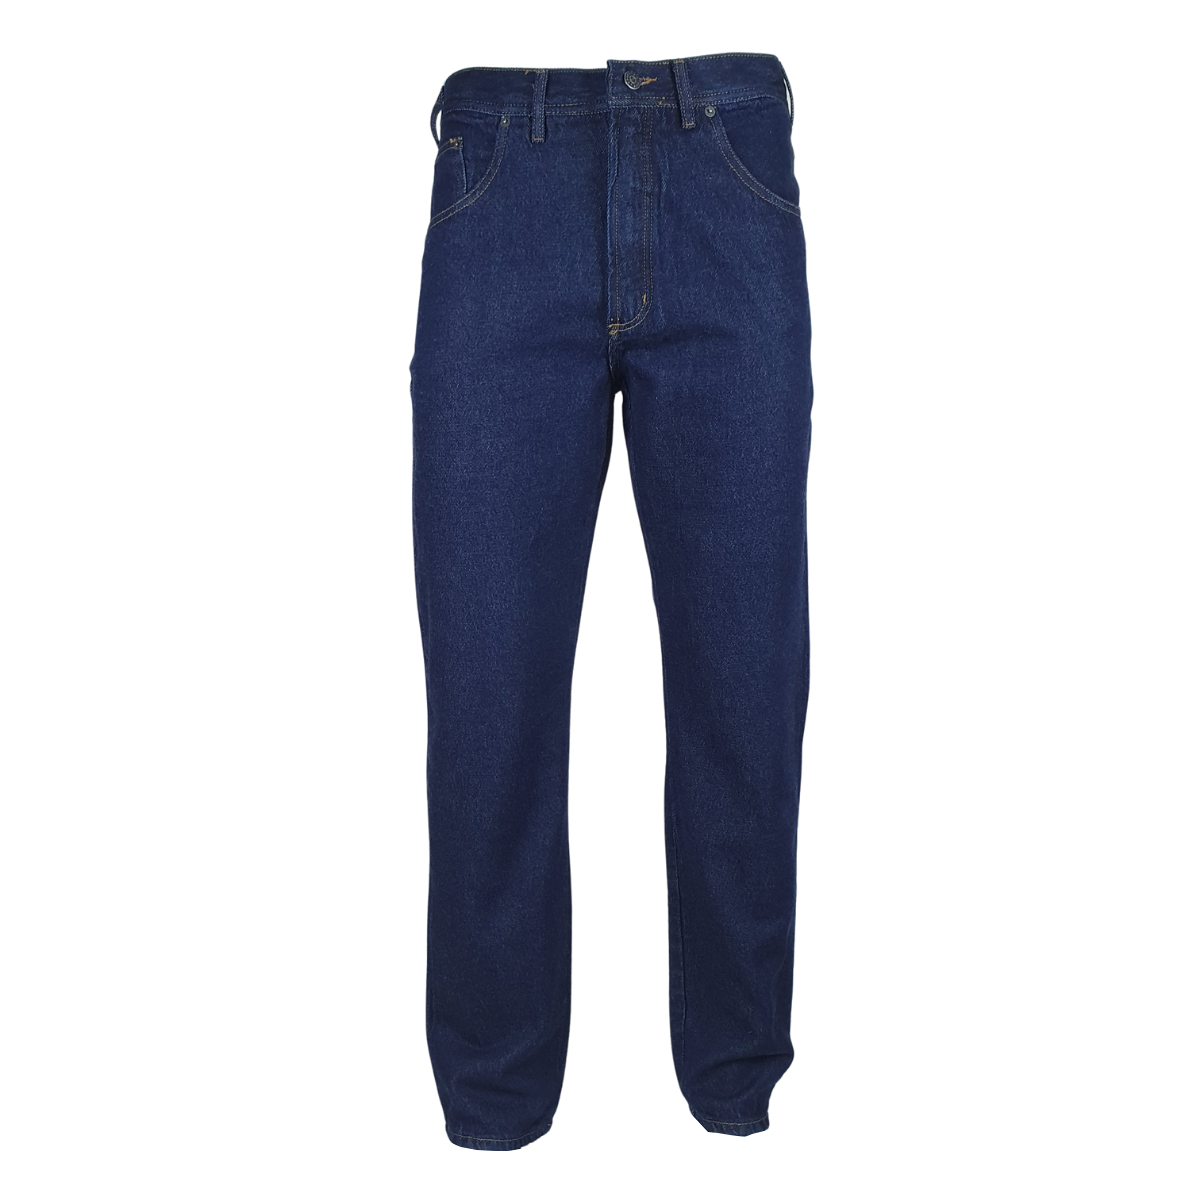 Calça Jeans Tradicional 100% Algodão Cintura Alta-Pierre Cardin Original  - Successful´Man - Moda Masculina